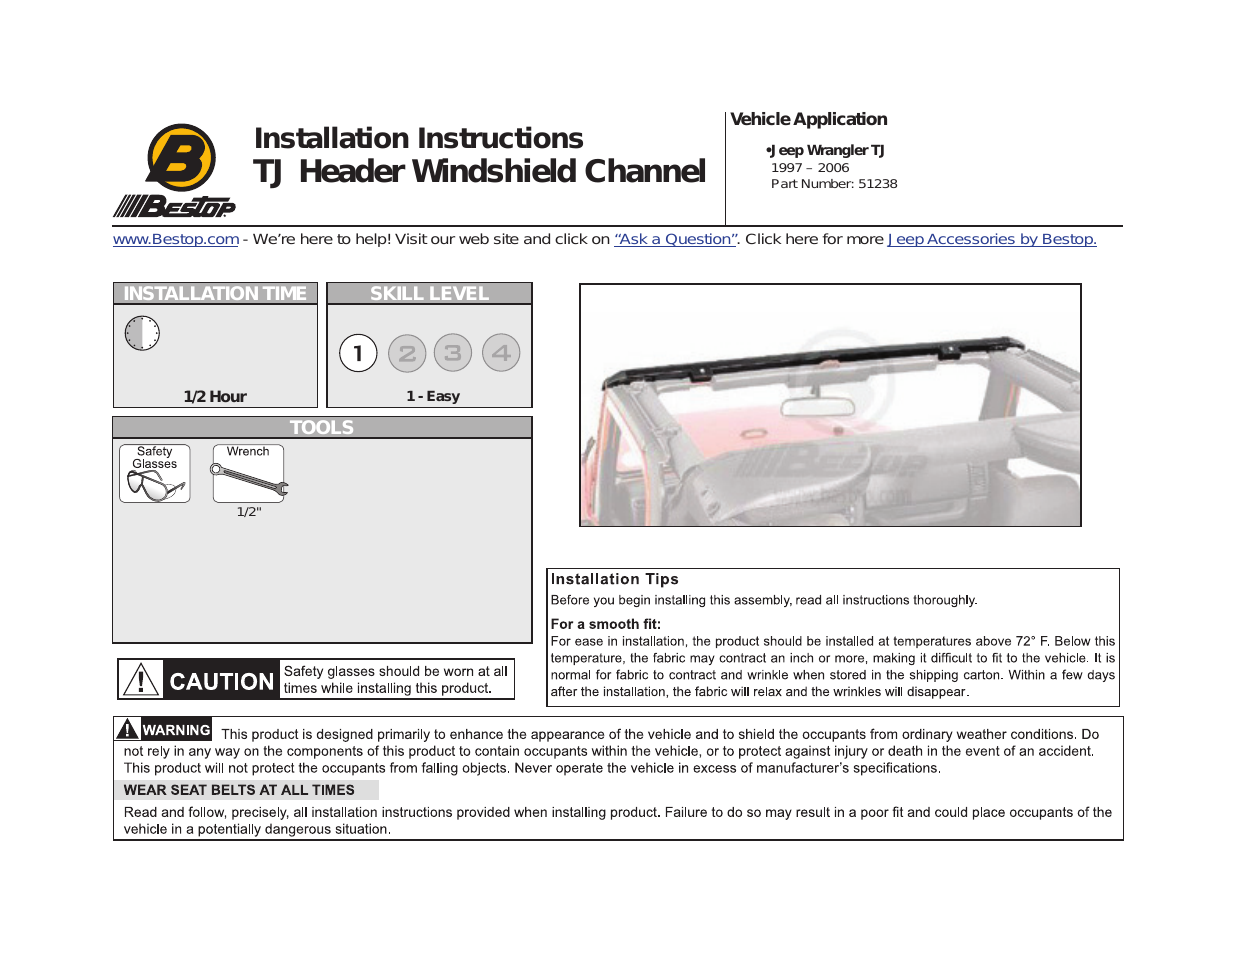 Windshield Channel for Jeep Wrangler TJ (Part Number 51238)